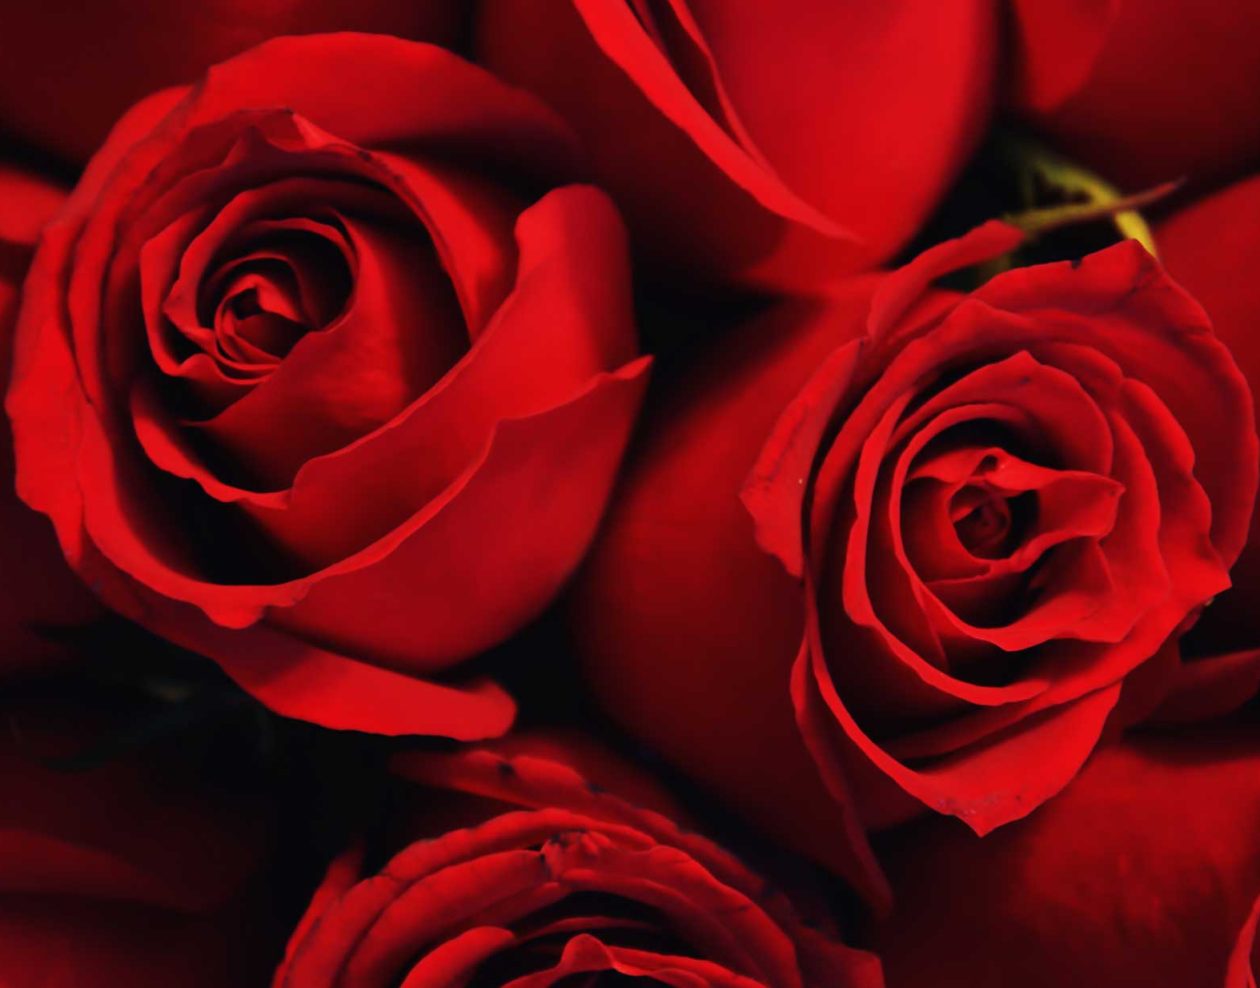 One dozen beautiful red roses